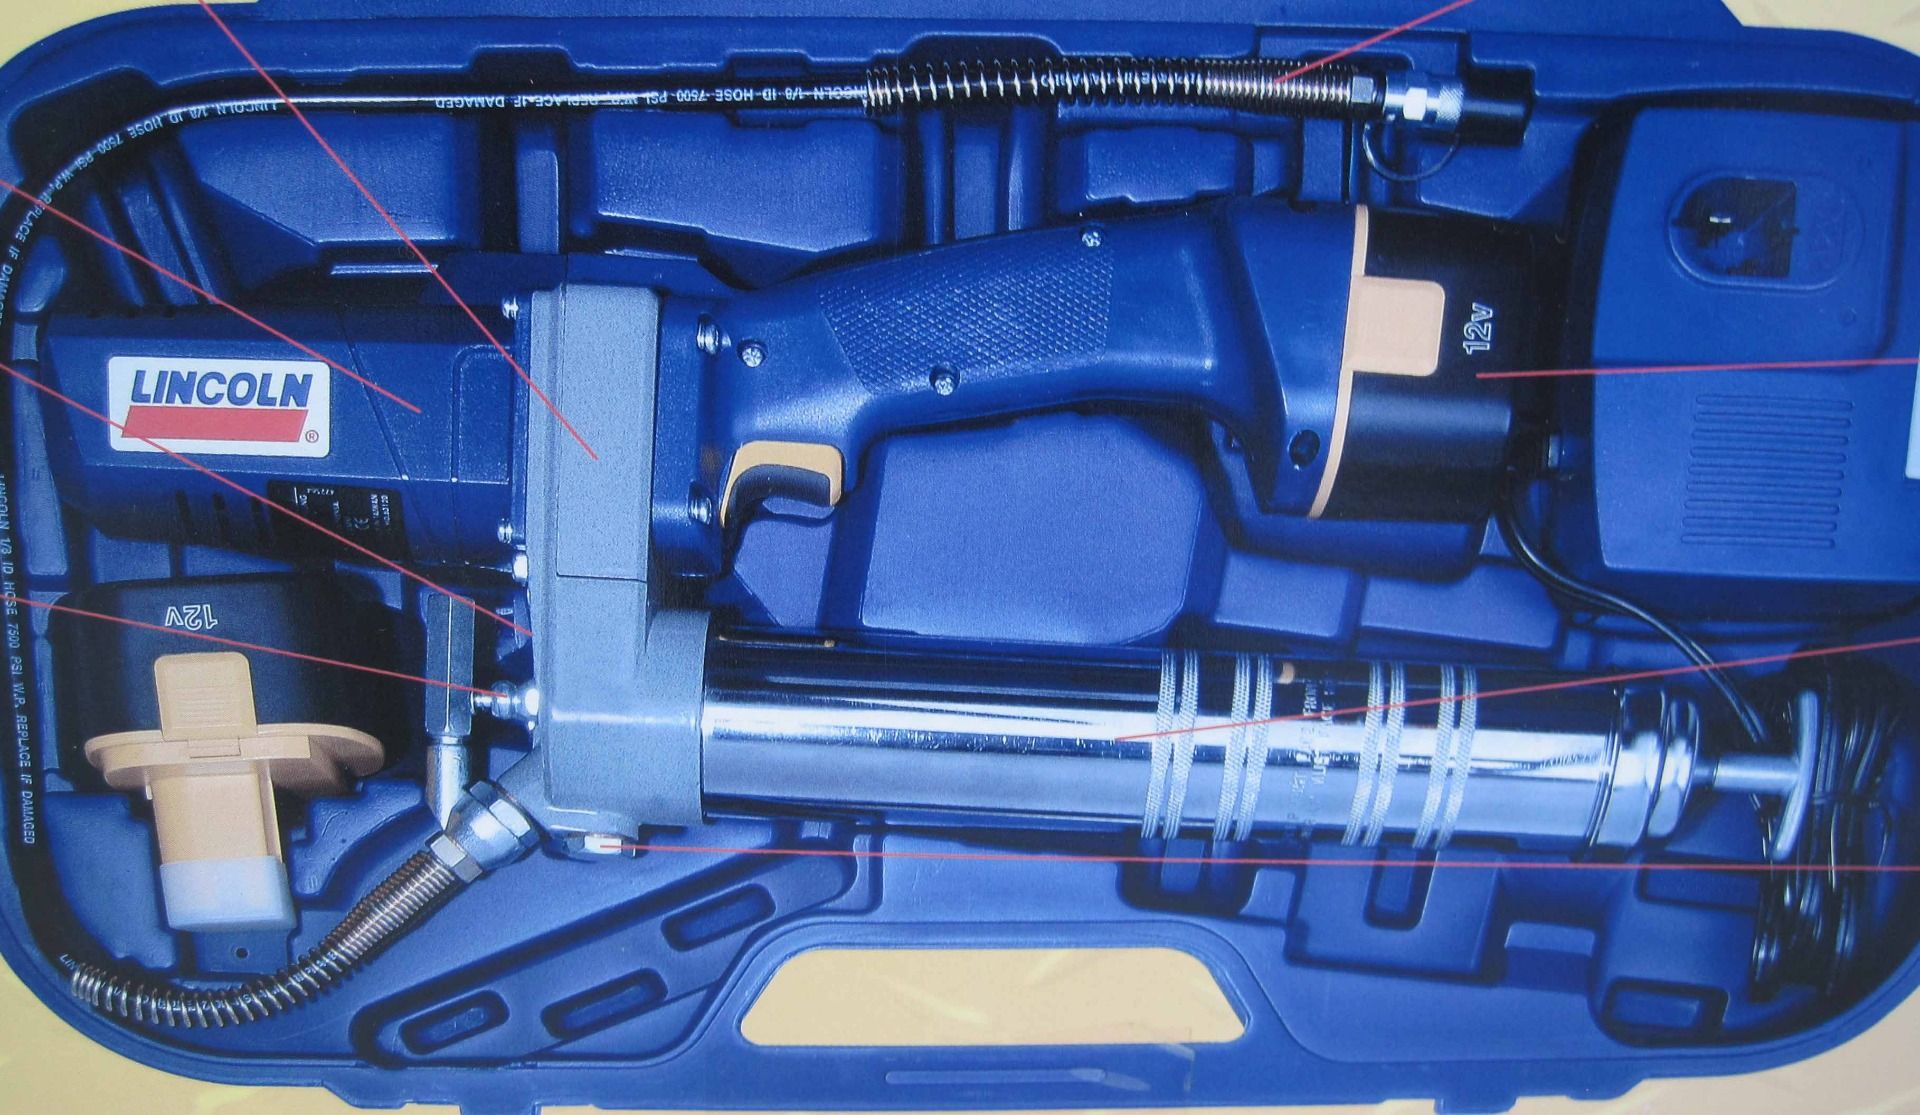 12 volt cordless rechargable Grease Gun by Lincoln LIN-1244